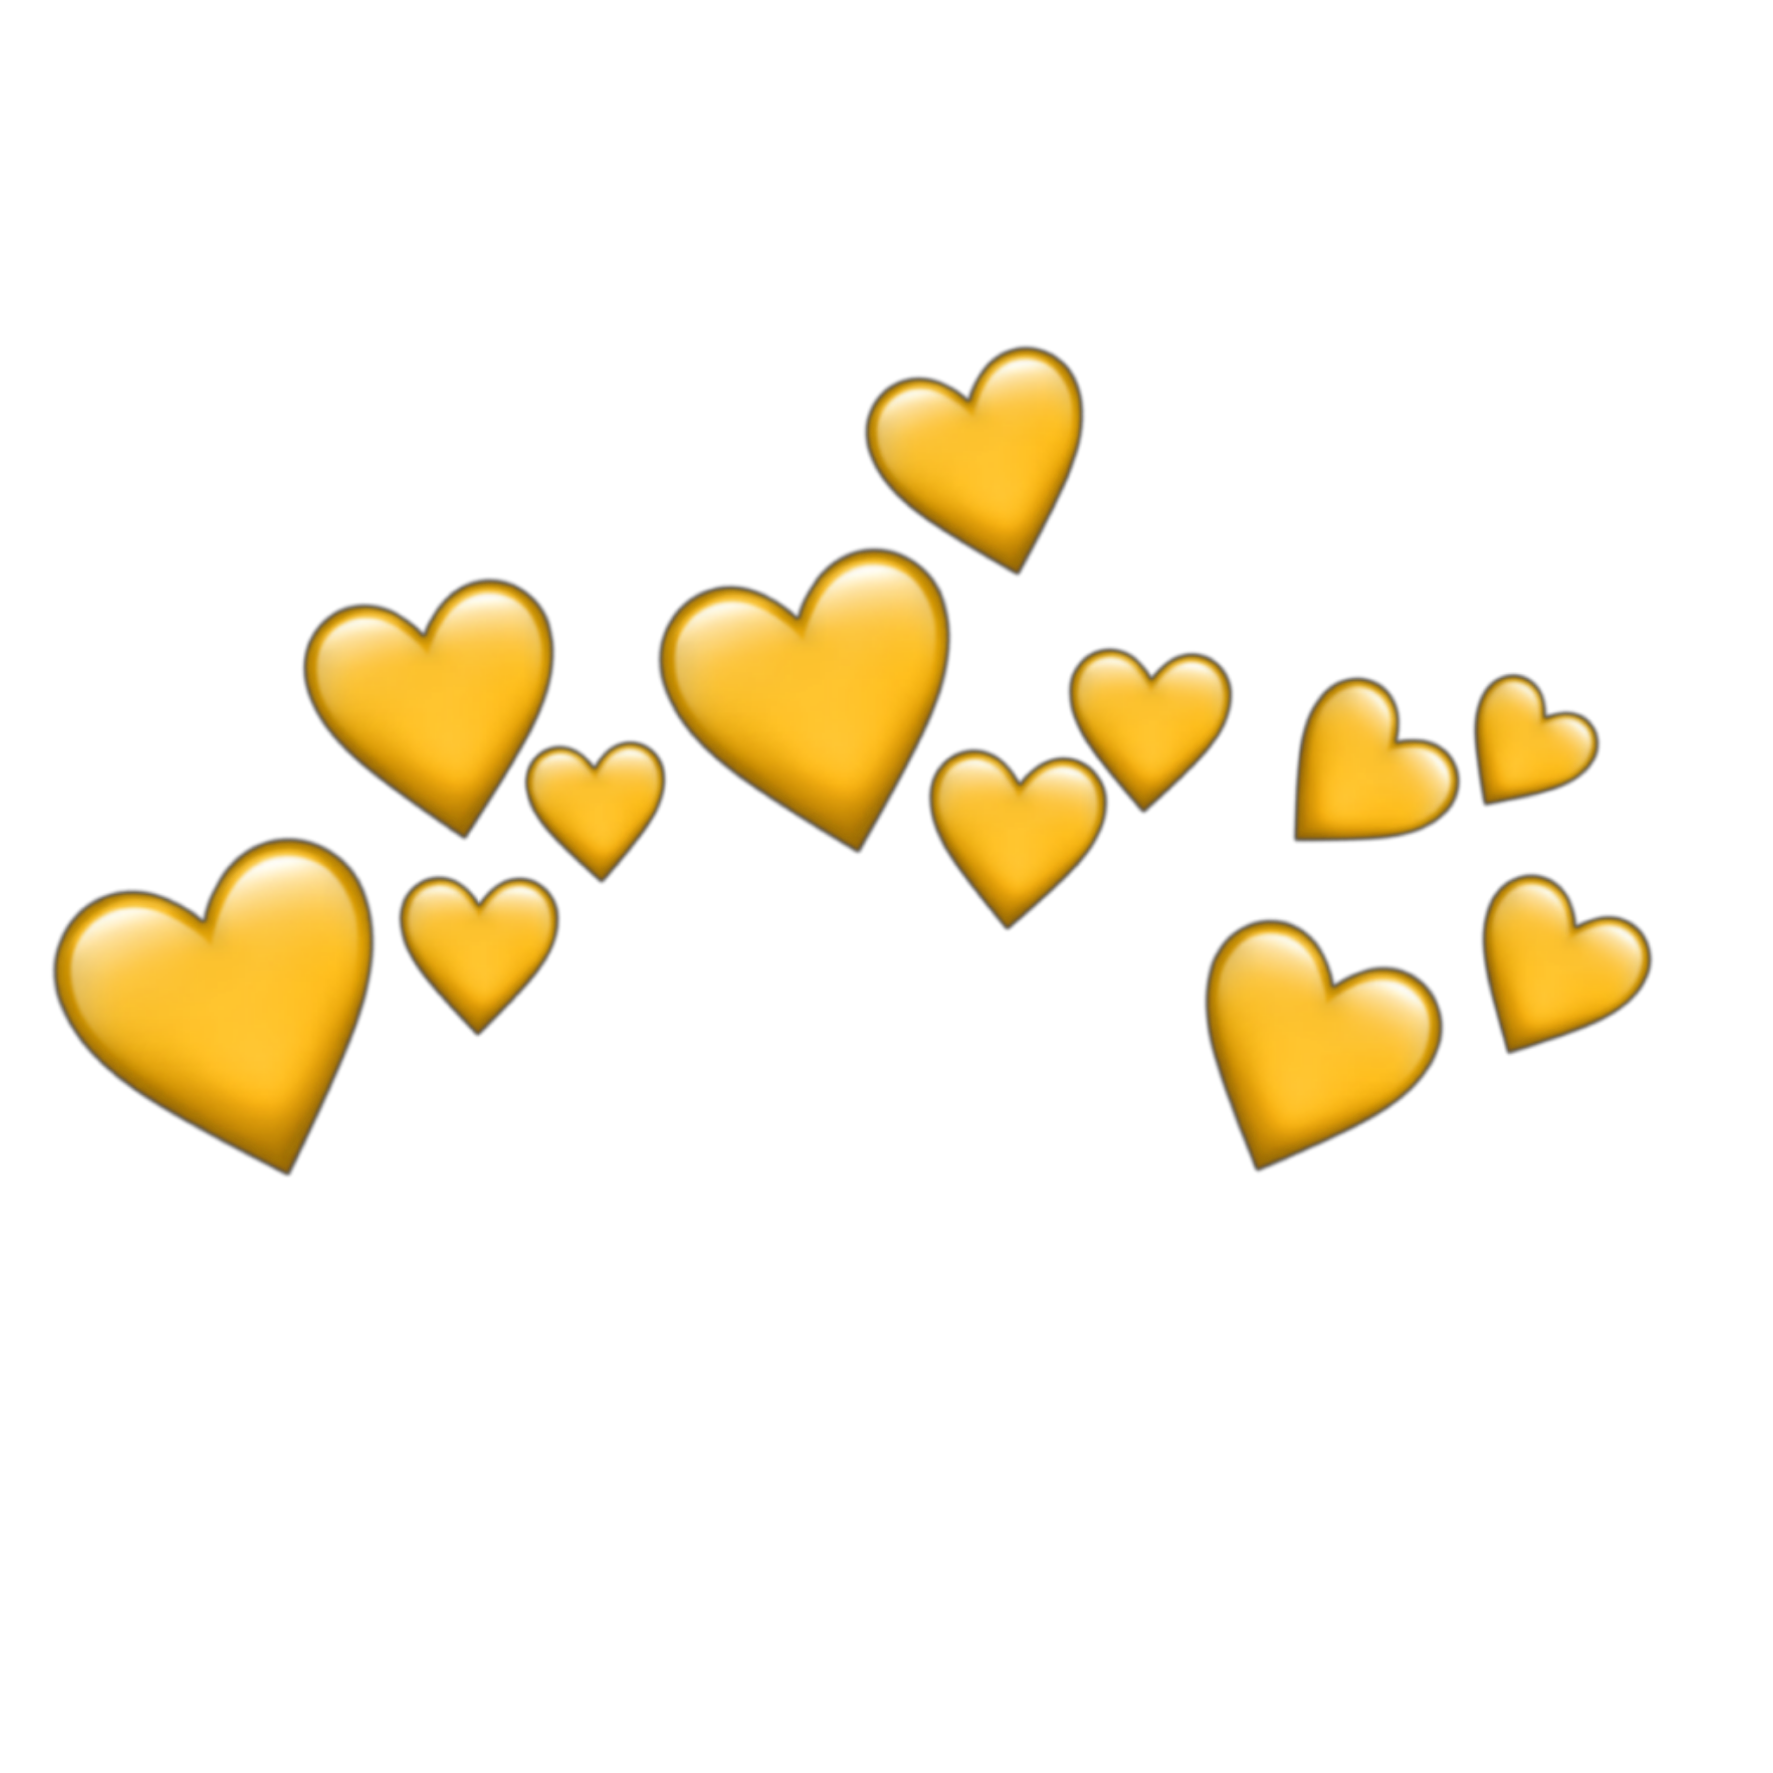 Emoji heart png. Сердечки (желтые). Жёлтые сердечки над головой. Сердечки над головой. Стикер сердечко на прозрачном фоне.